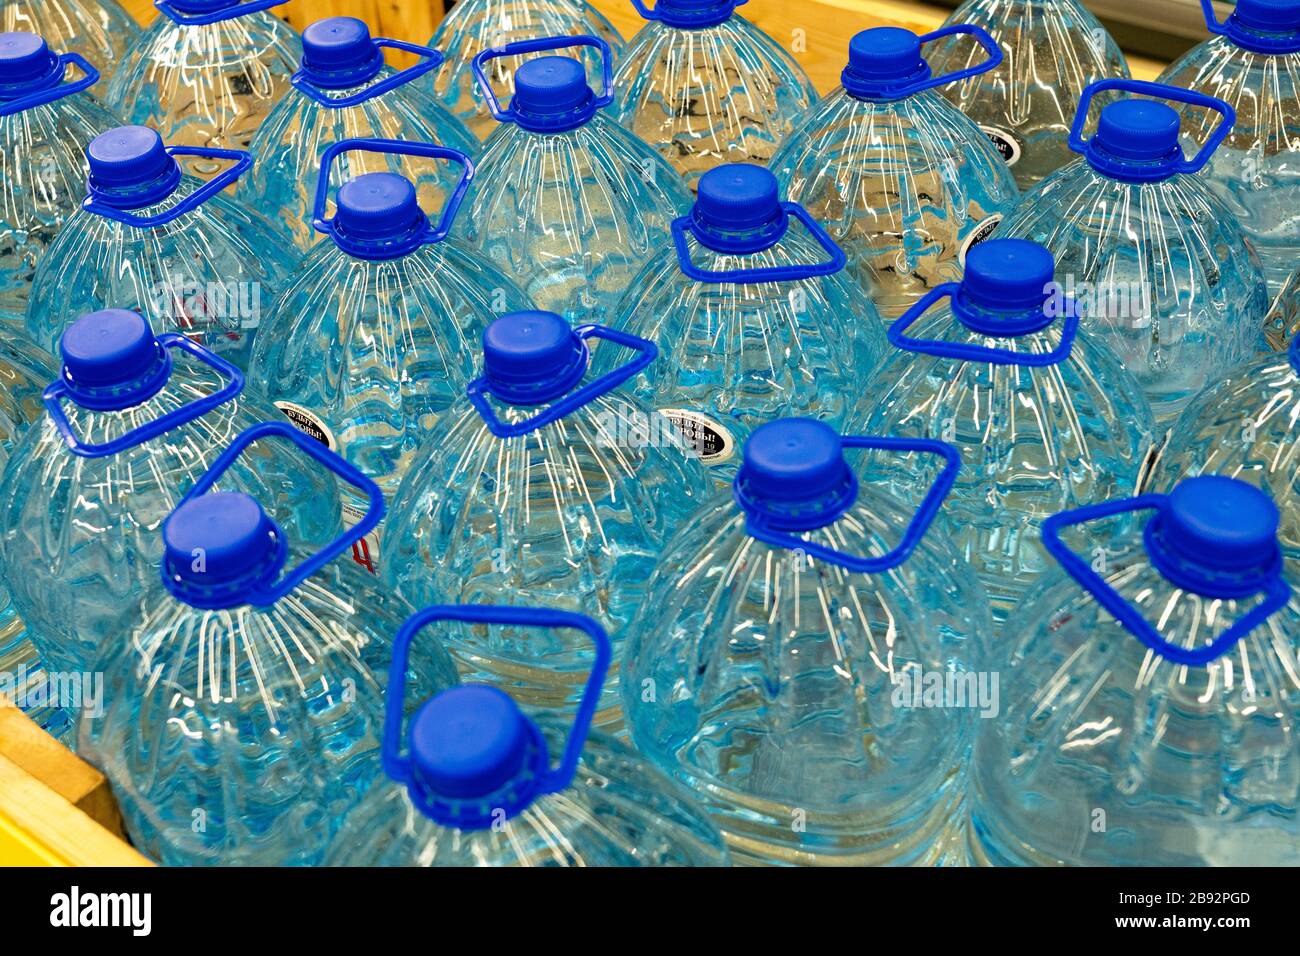 https://c8.alamy.com/comp/2B92PGD/drinking-water-bottles-in-a-store-batch-of-plastic-bottles-of-water-2B92PGD.jpg